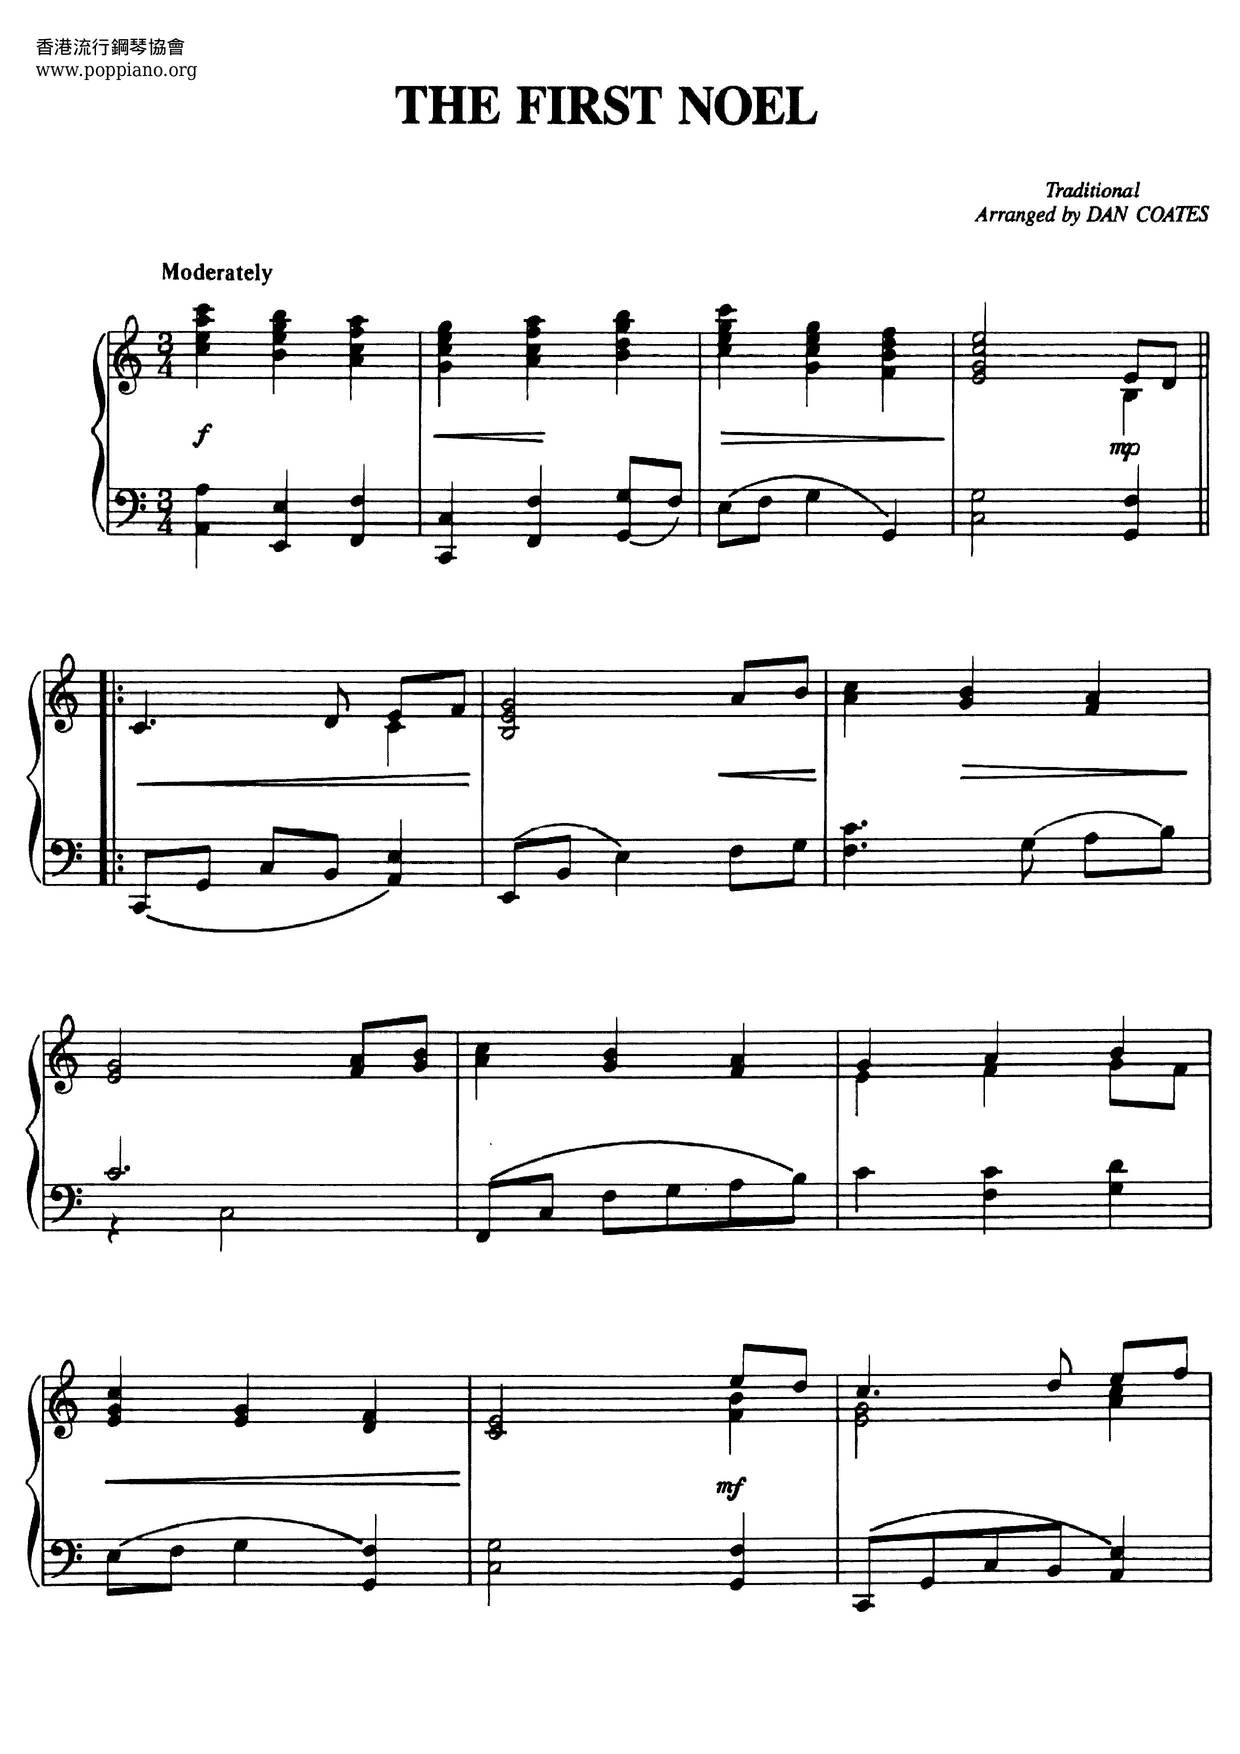 The First Noel Score